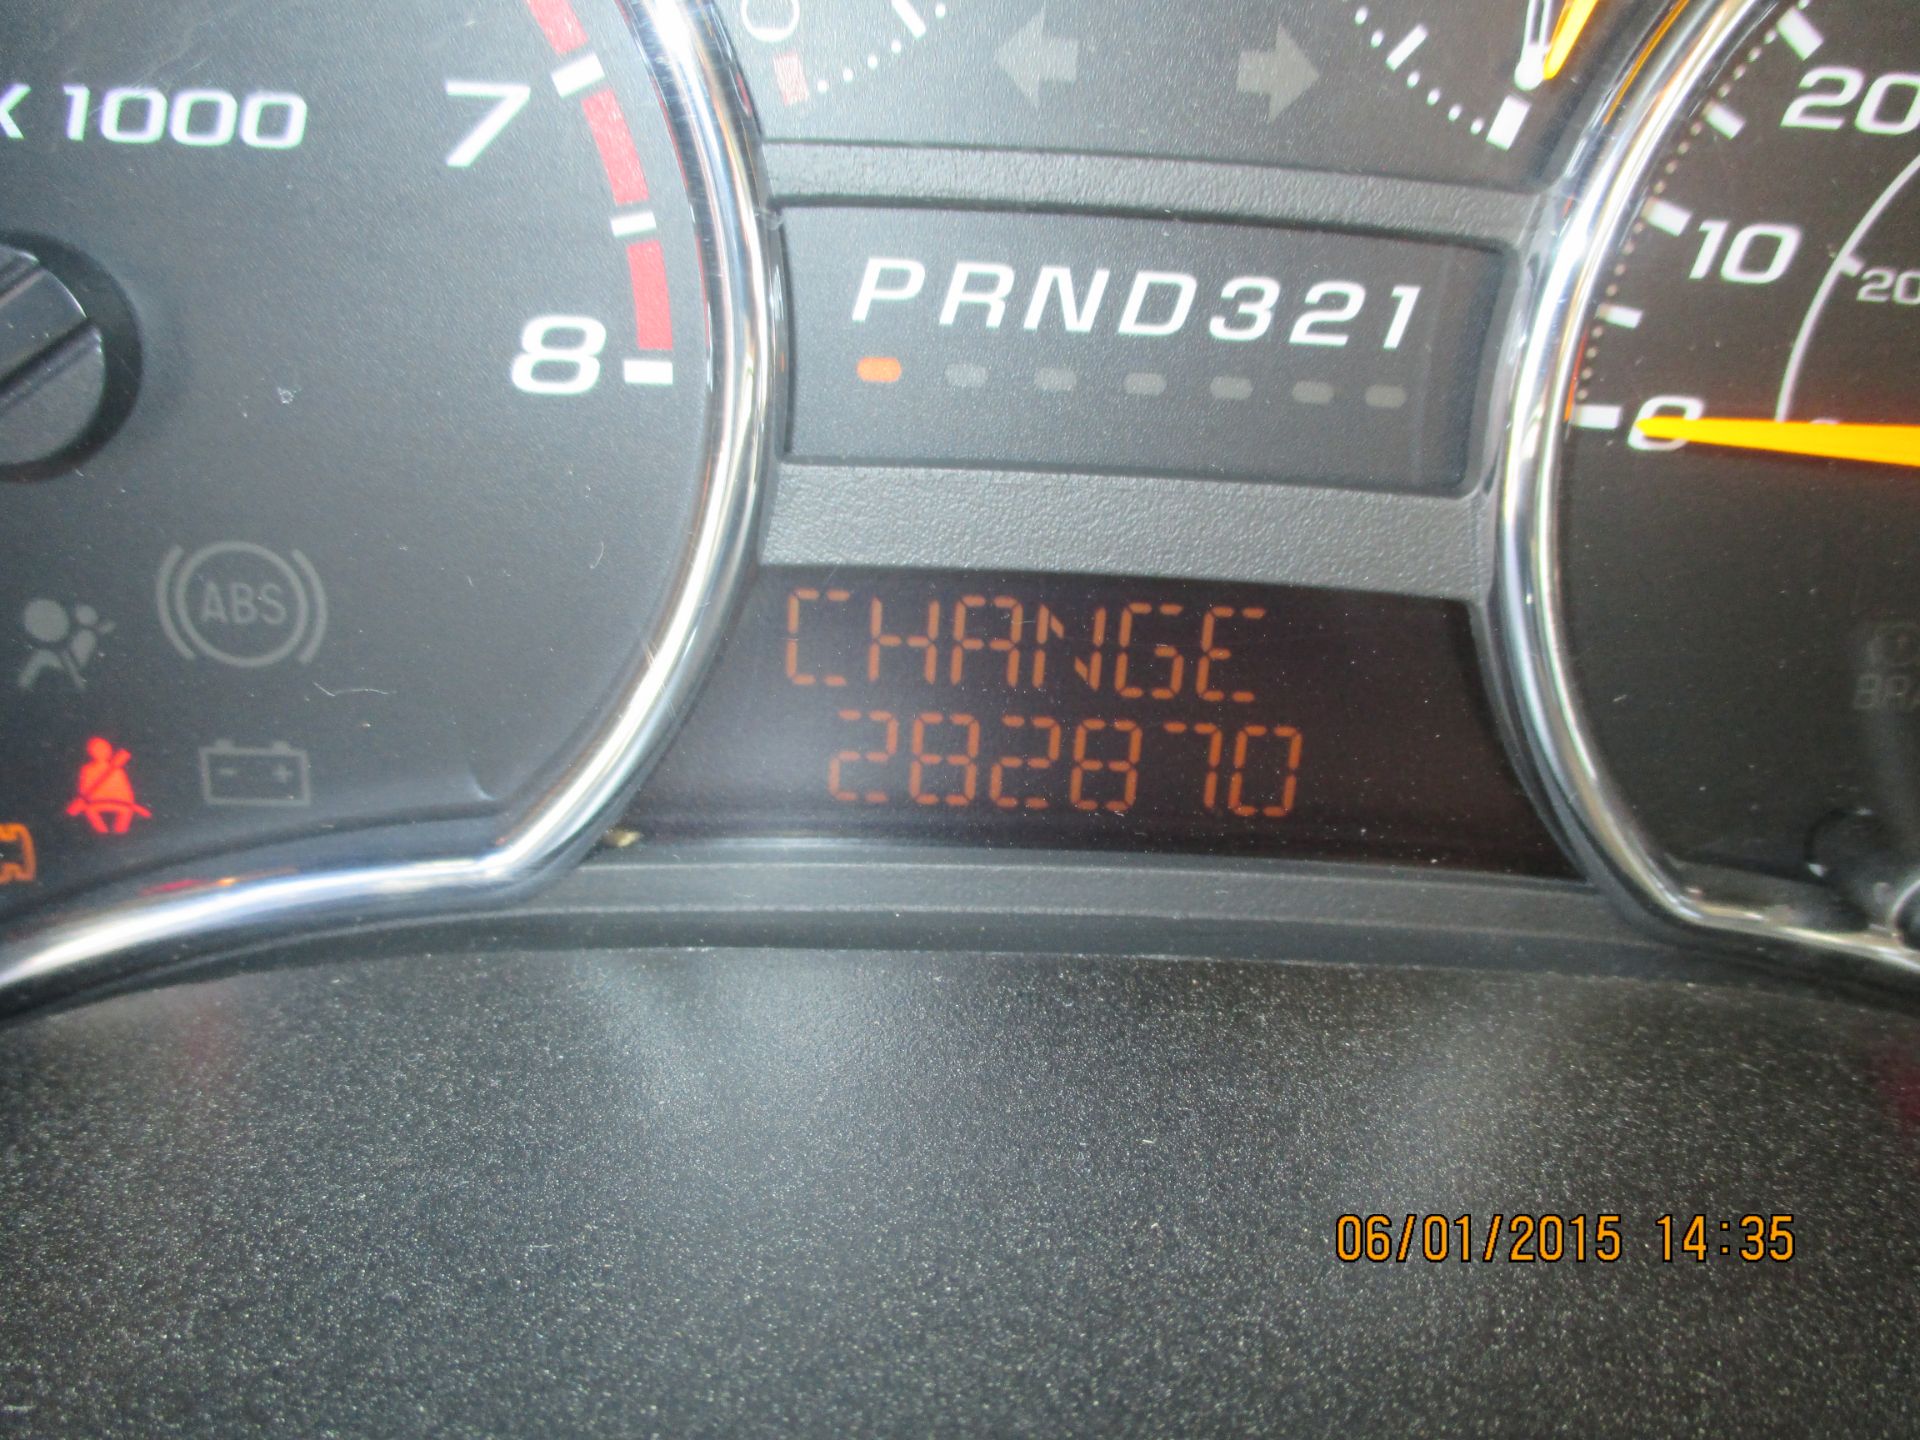 2008 Chev Colorado, ext cab, 4x2, 282,870 miles, VIN:1GCCS39E588210338 - Image 18 of 21